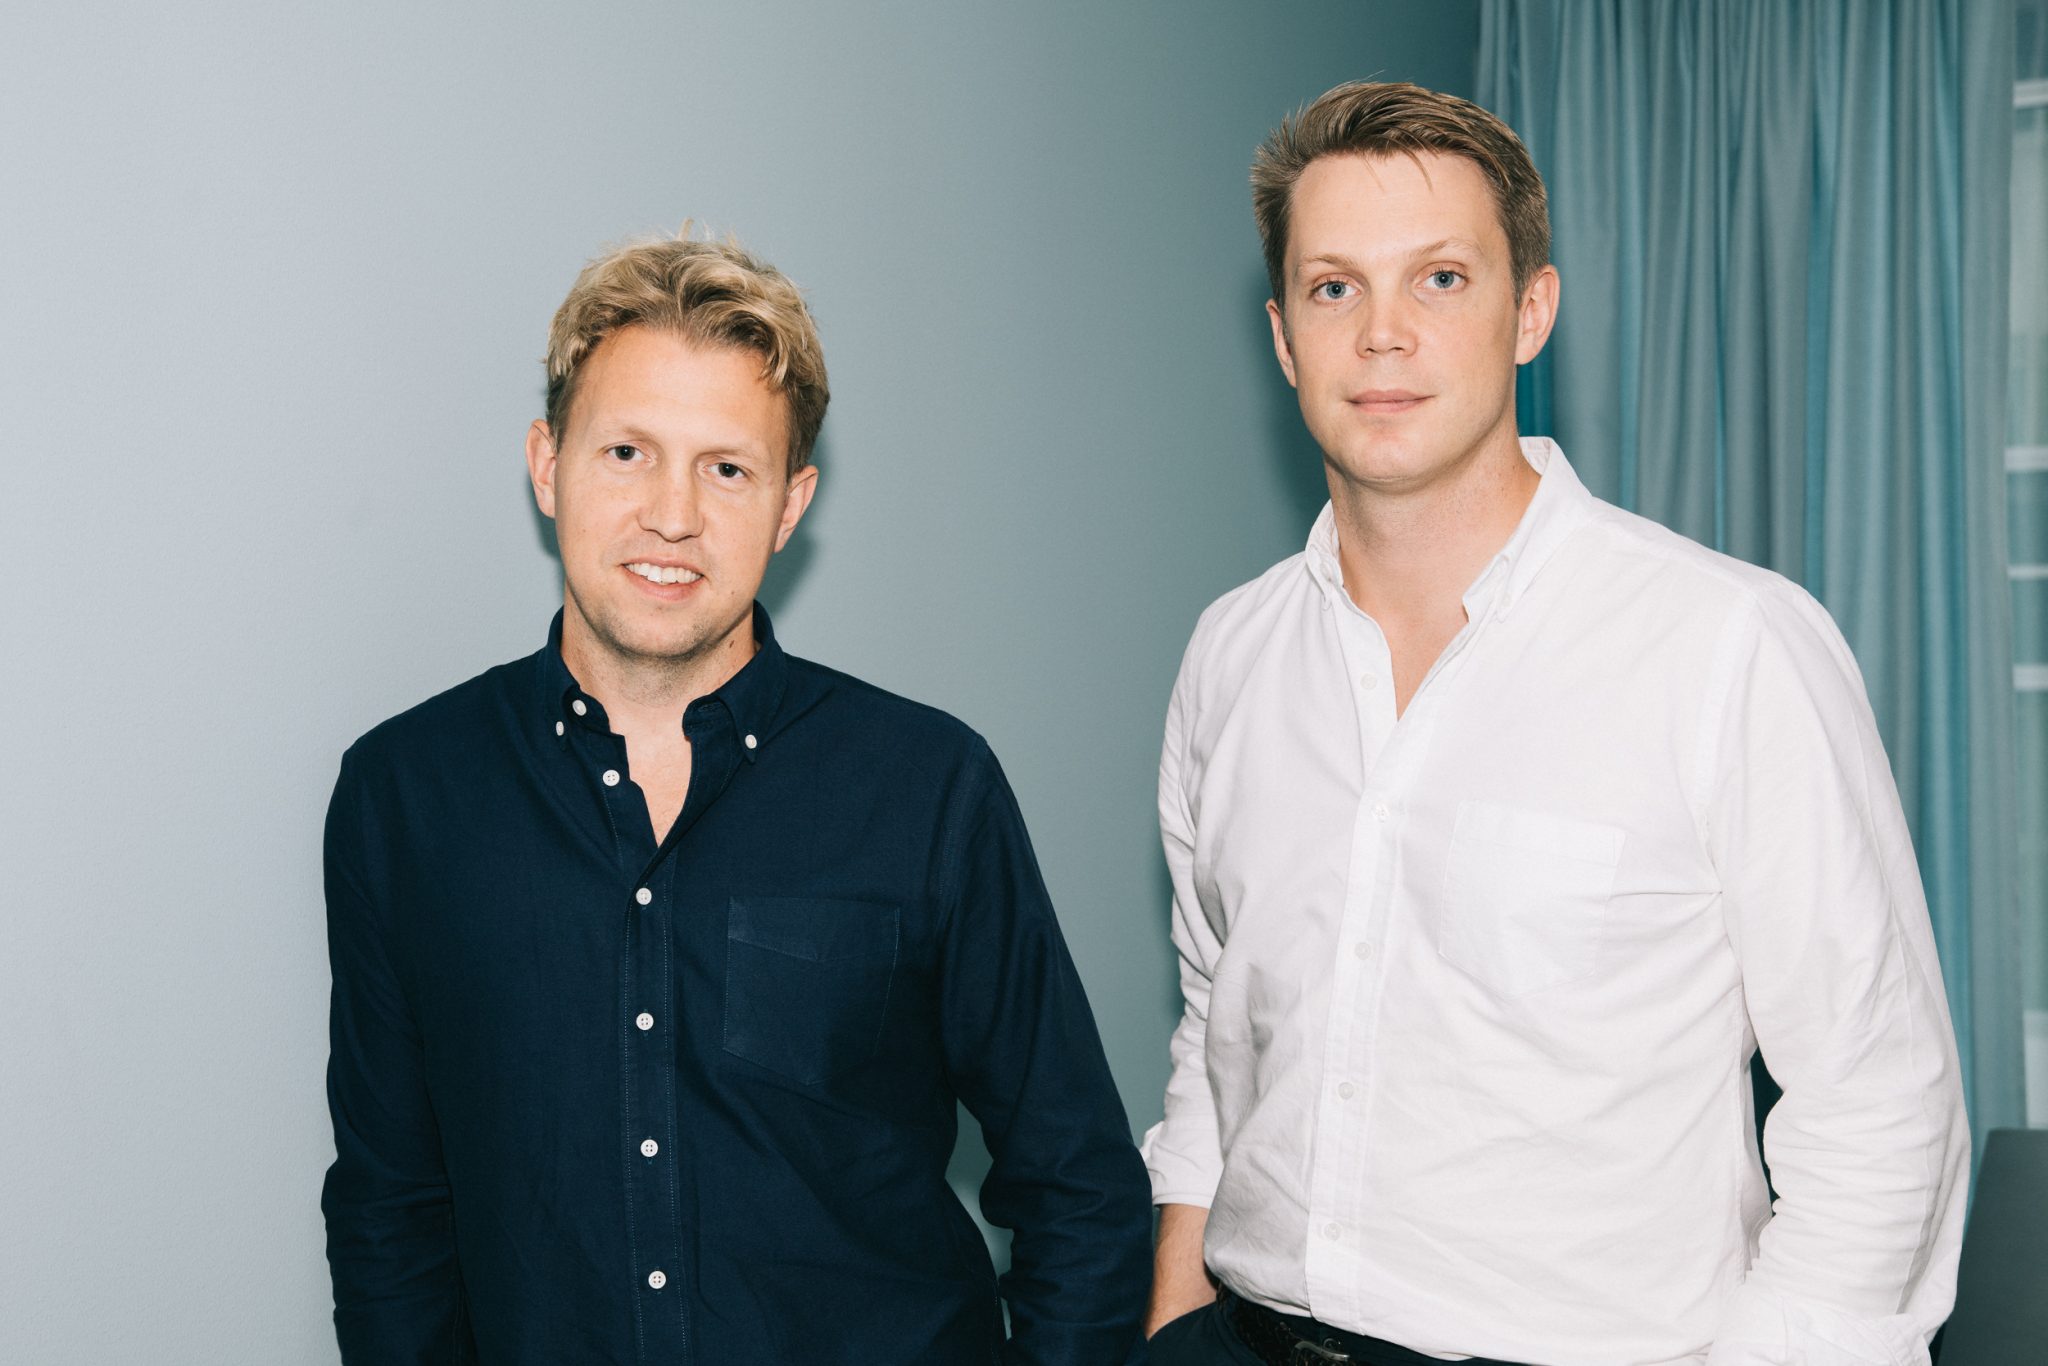 Tink CEO Daniel Kjellen and CTO Fredrik Hedberg